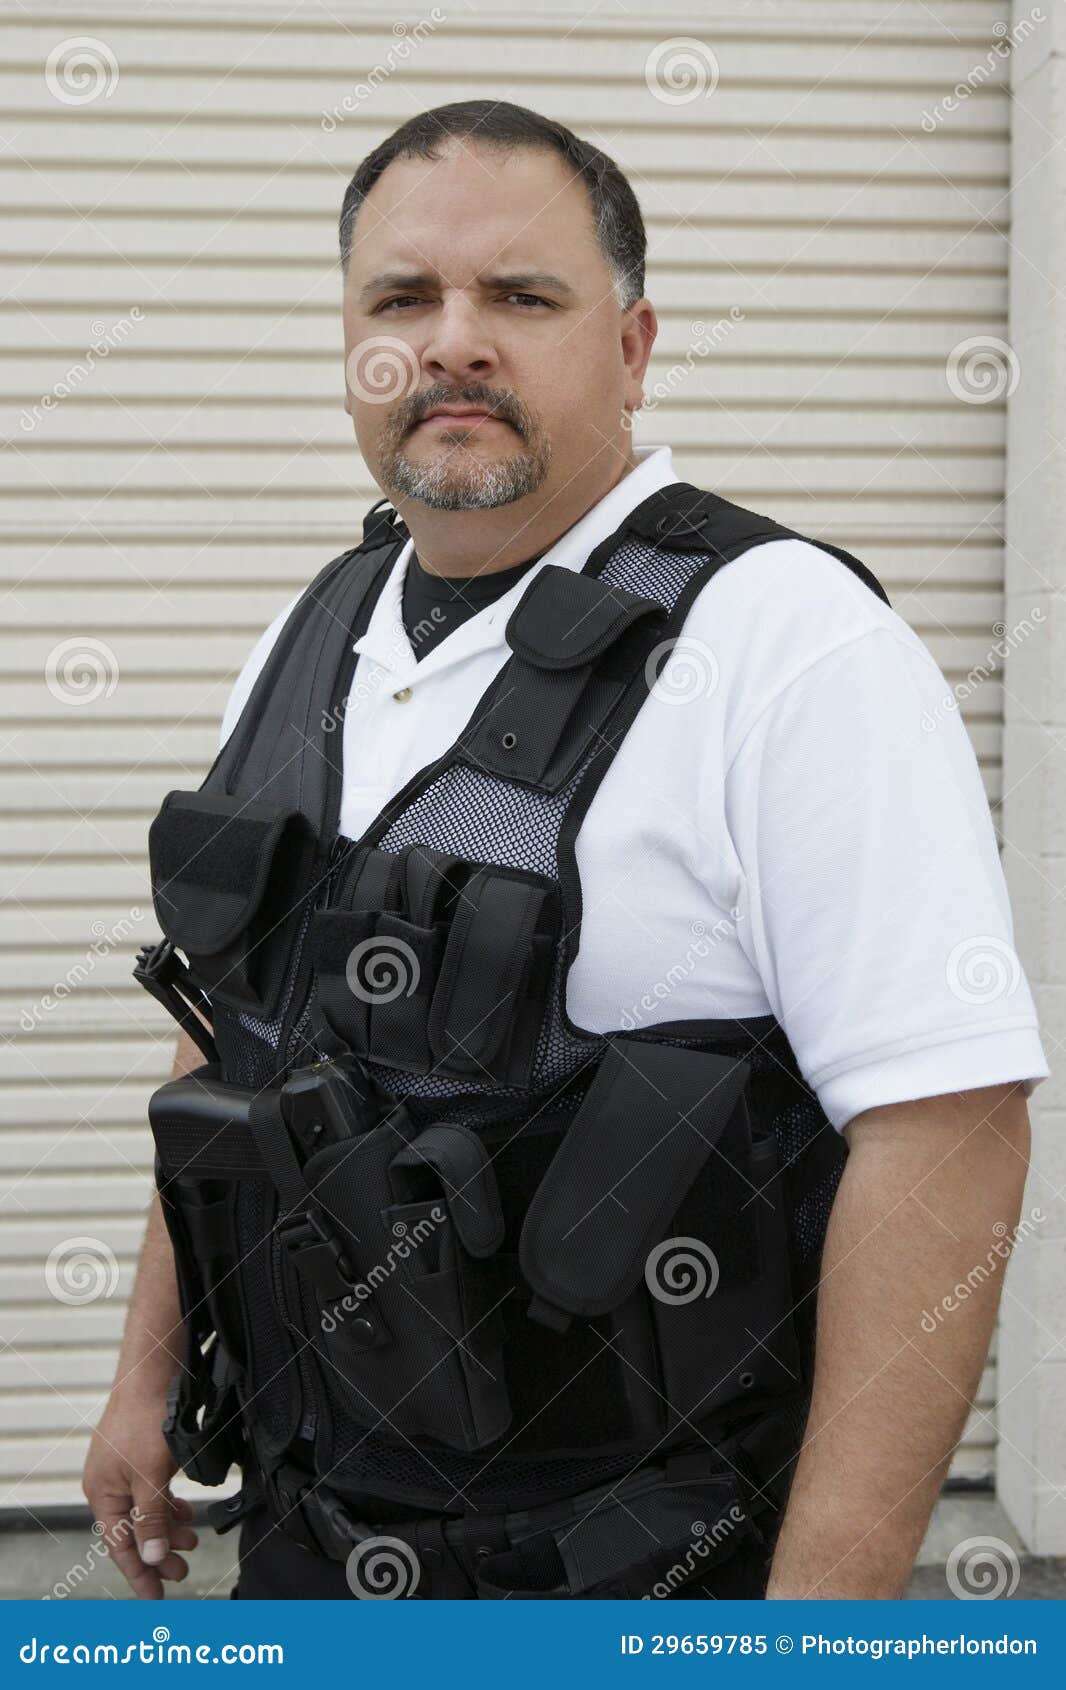 security guard in bulletproof vest